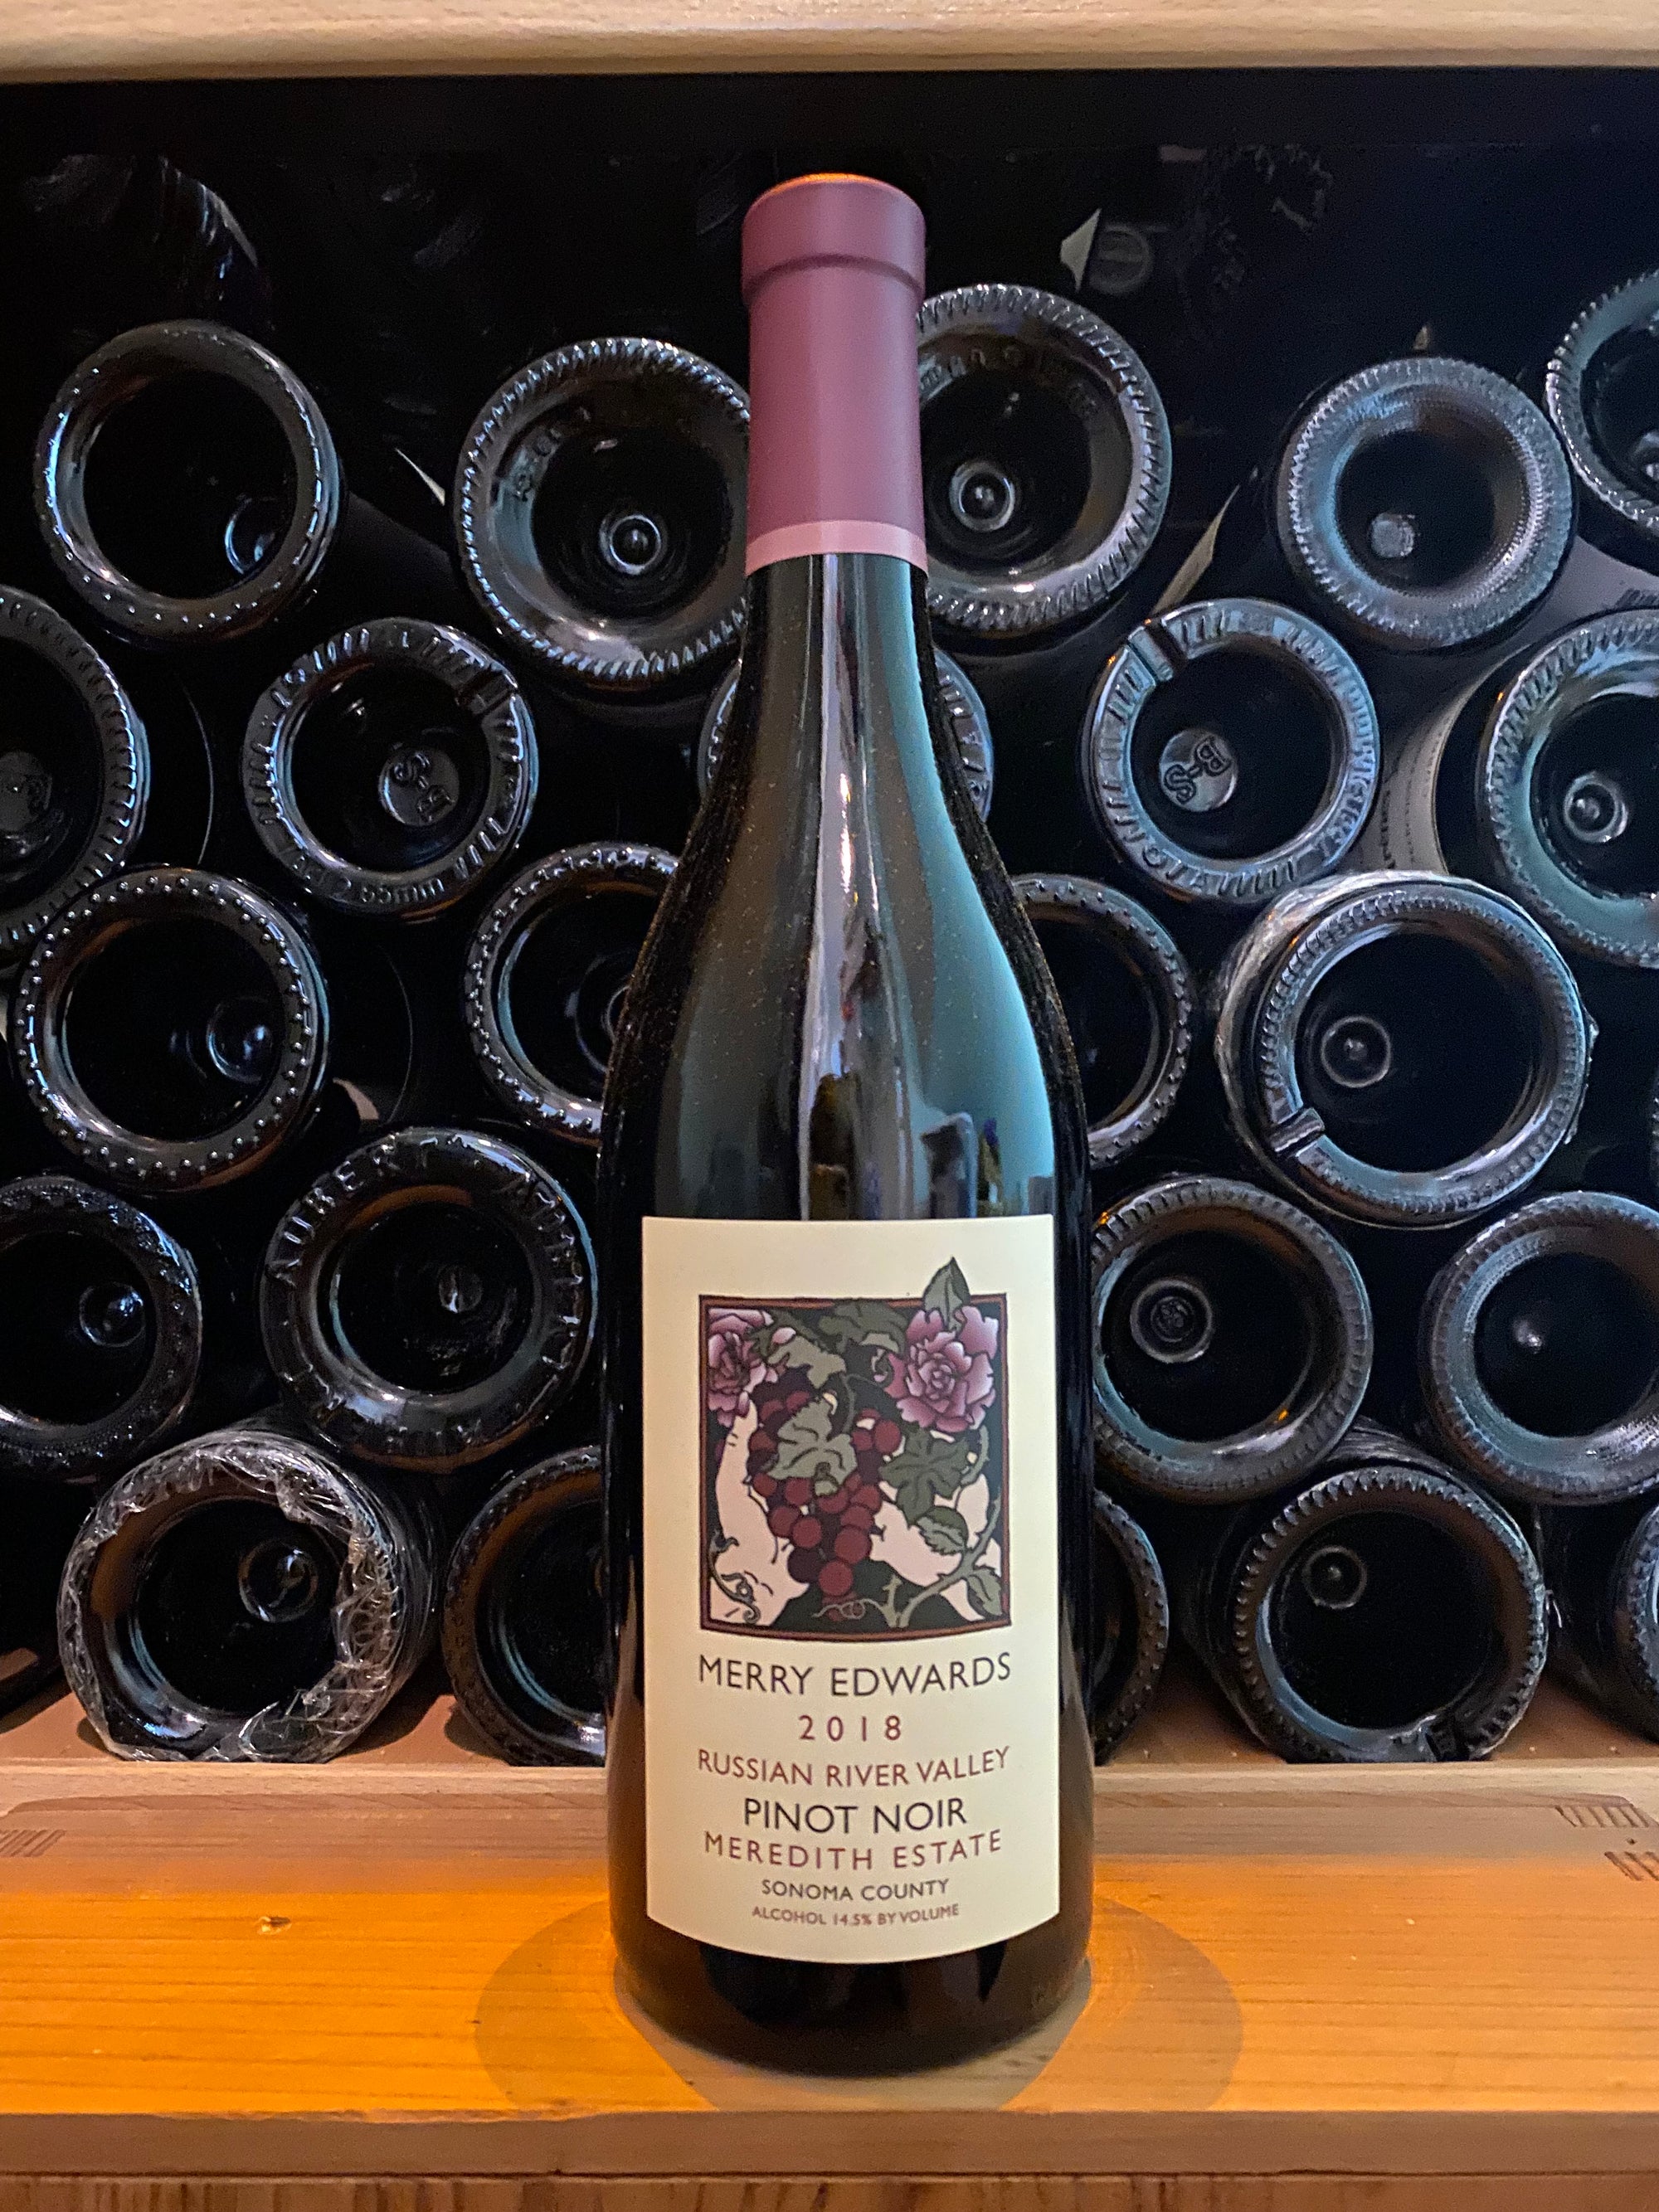 Merry Edwards Meredith Estate Pinot Noir 2018